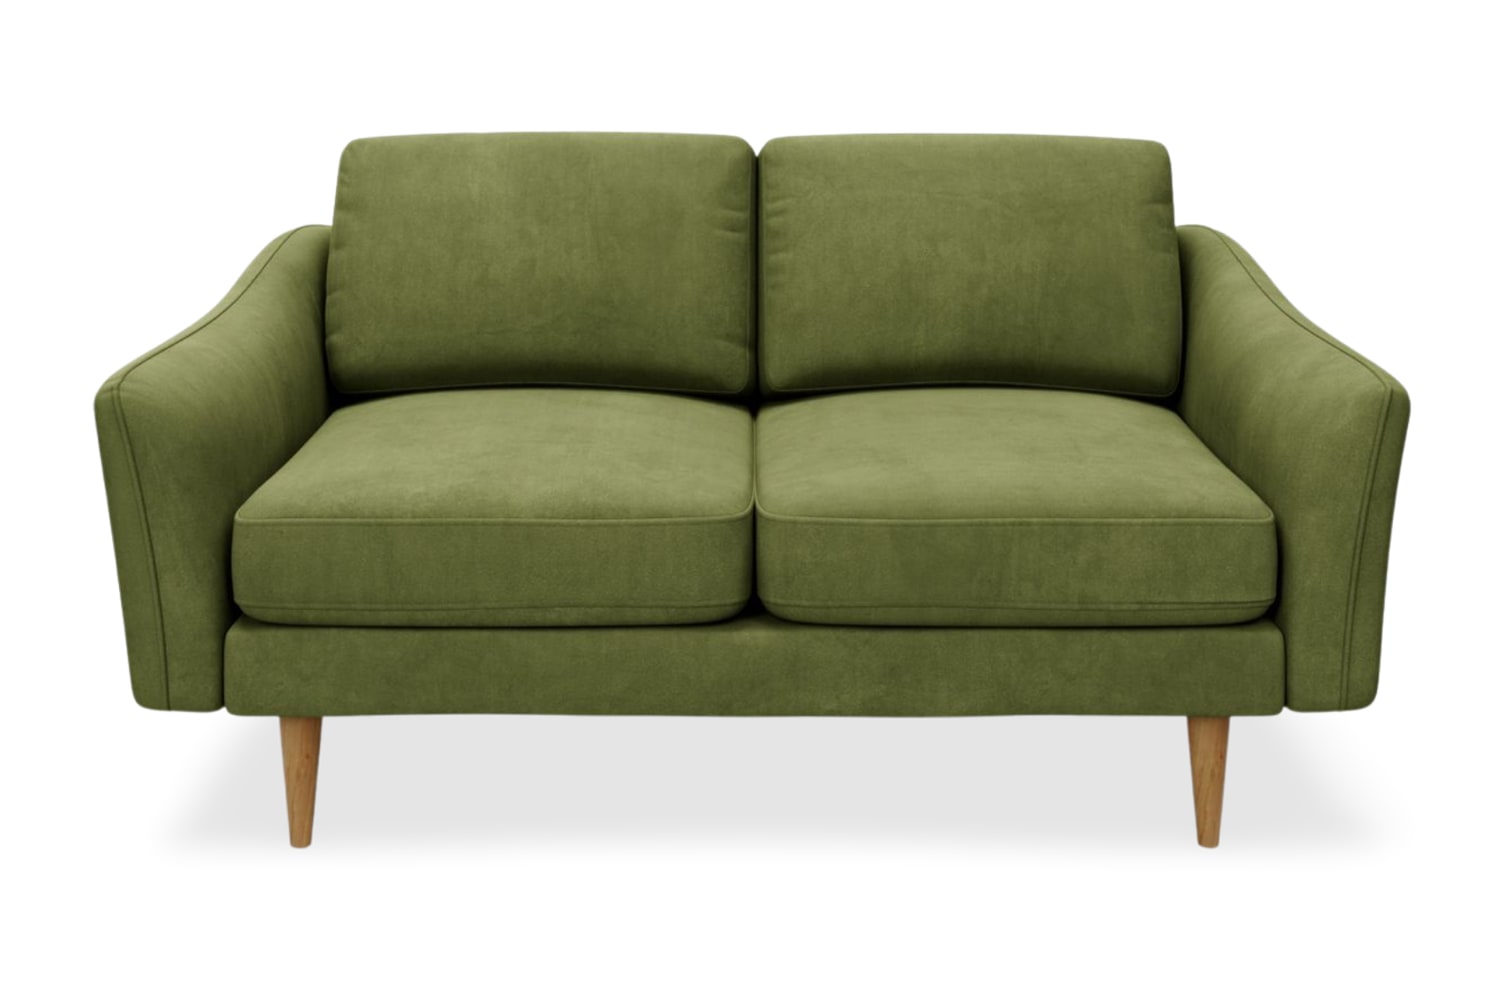 SNUG | The Rebel 2 Seater Sofa in Olive variant_40414889771056